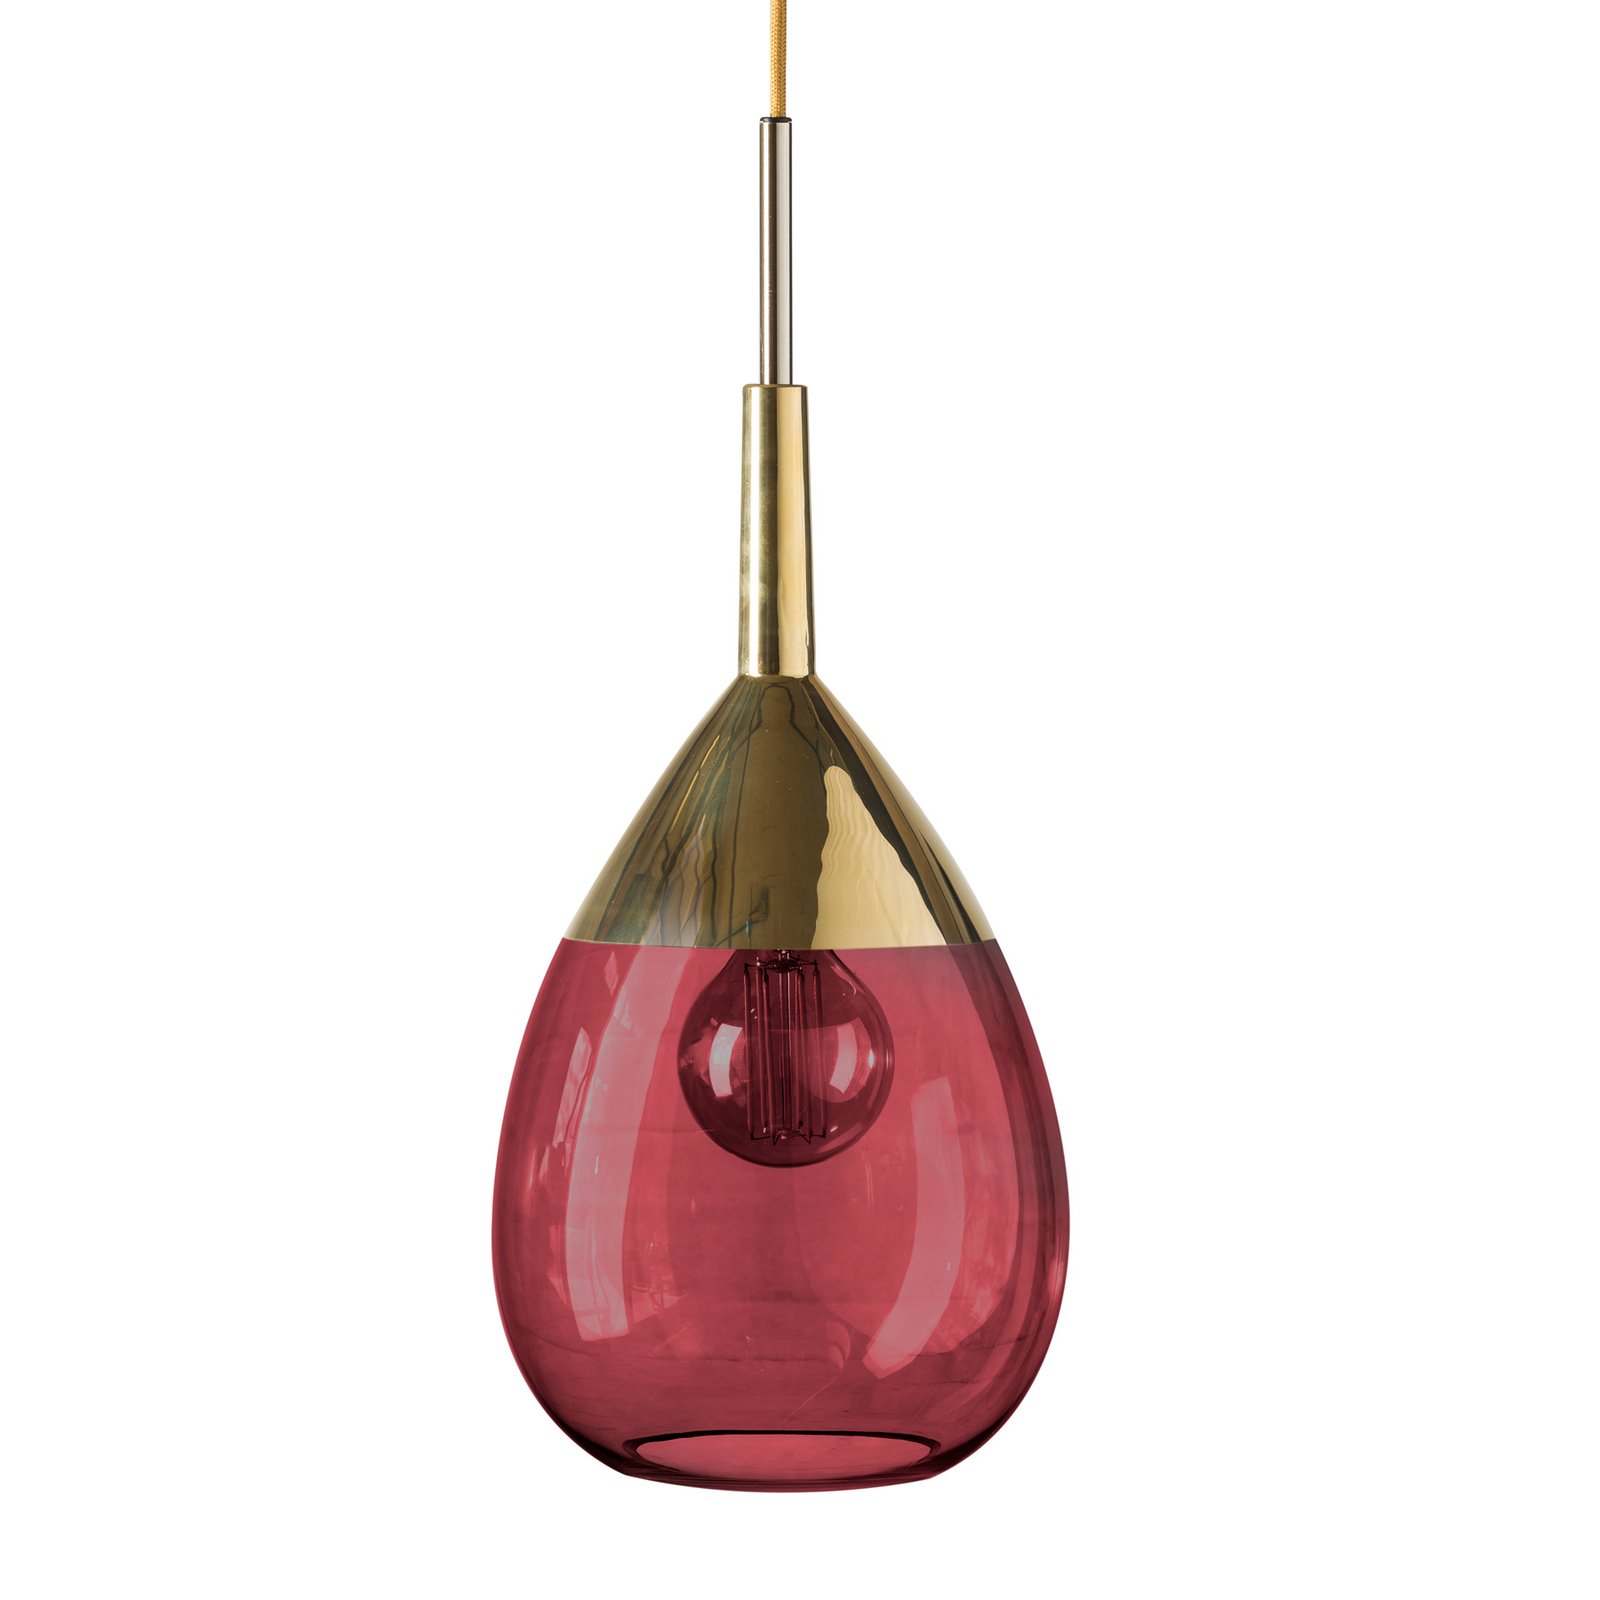 EBB & FLOW Lute M lámpara colgante oro rojo rubí